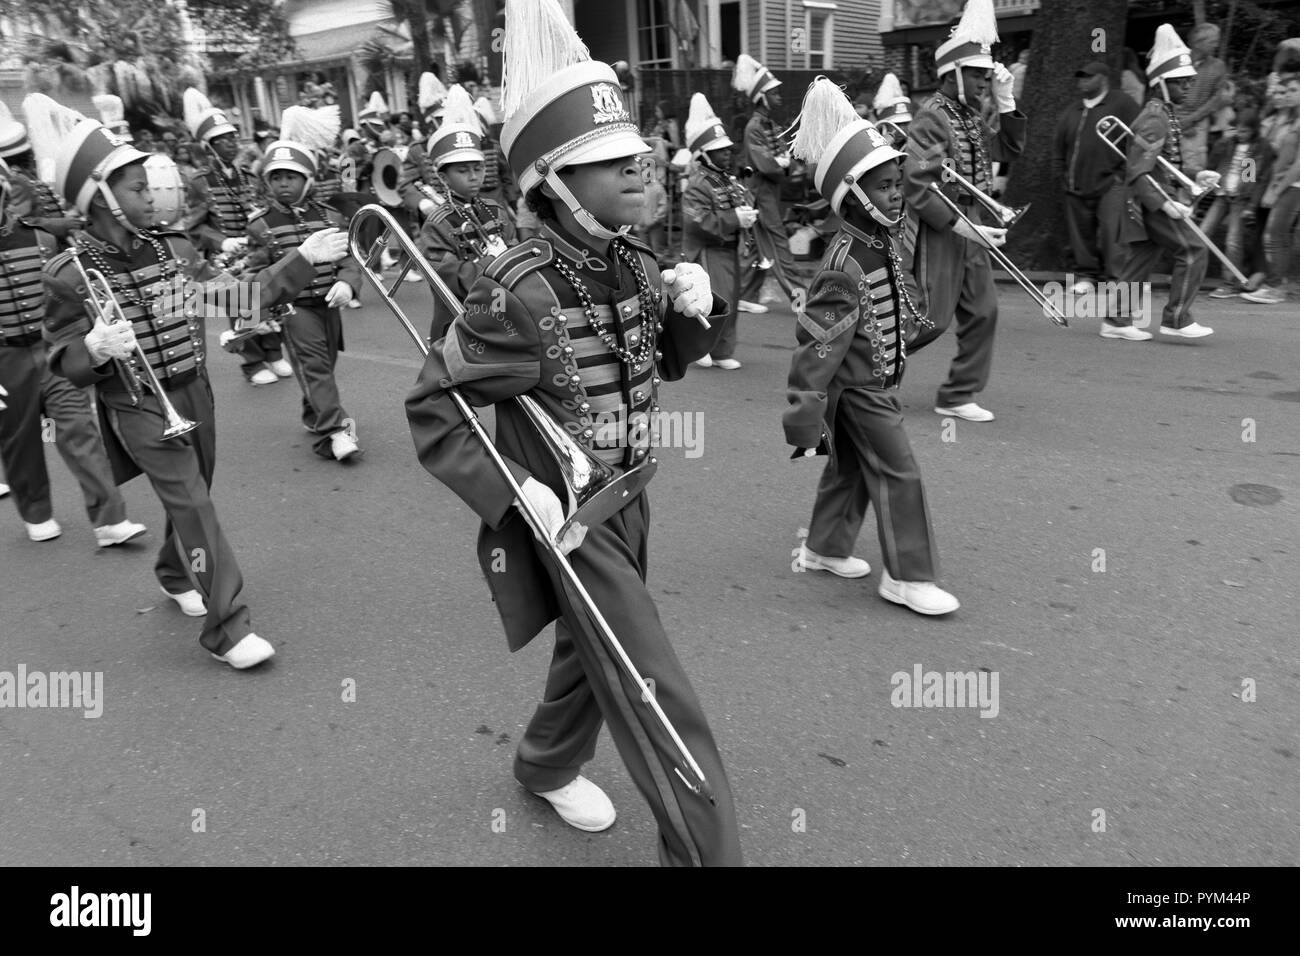 Children's Marching Band, Mardi Gras 2015, New Orleans, Louisiana, USA. Stockfoto